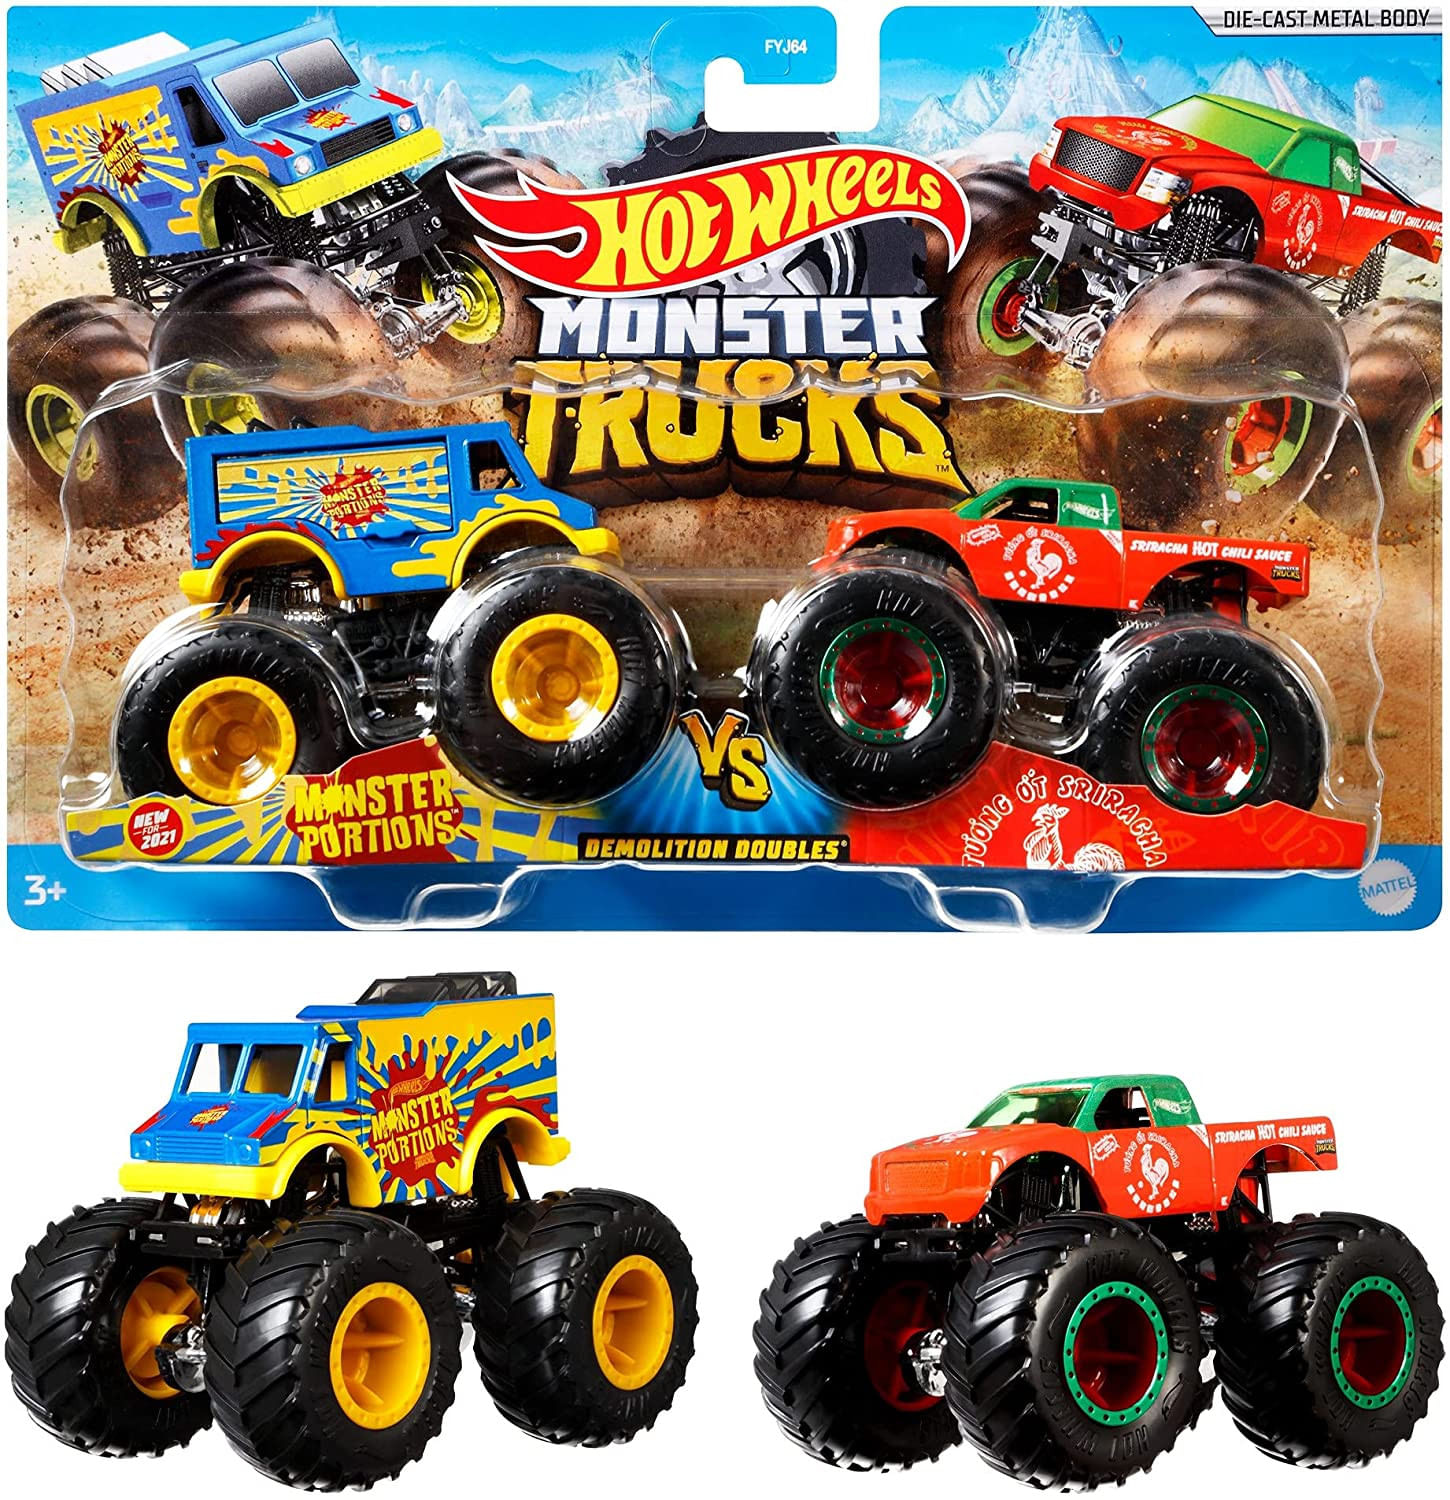 Carrinho de Controle Remoto Monster Truck Hot Wheels 4558 - Candide